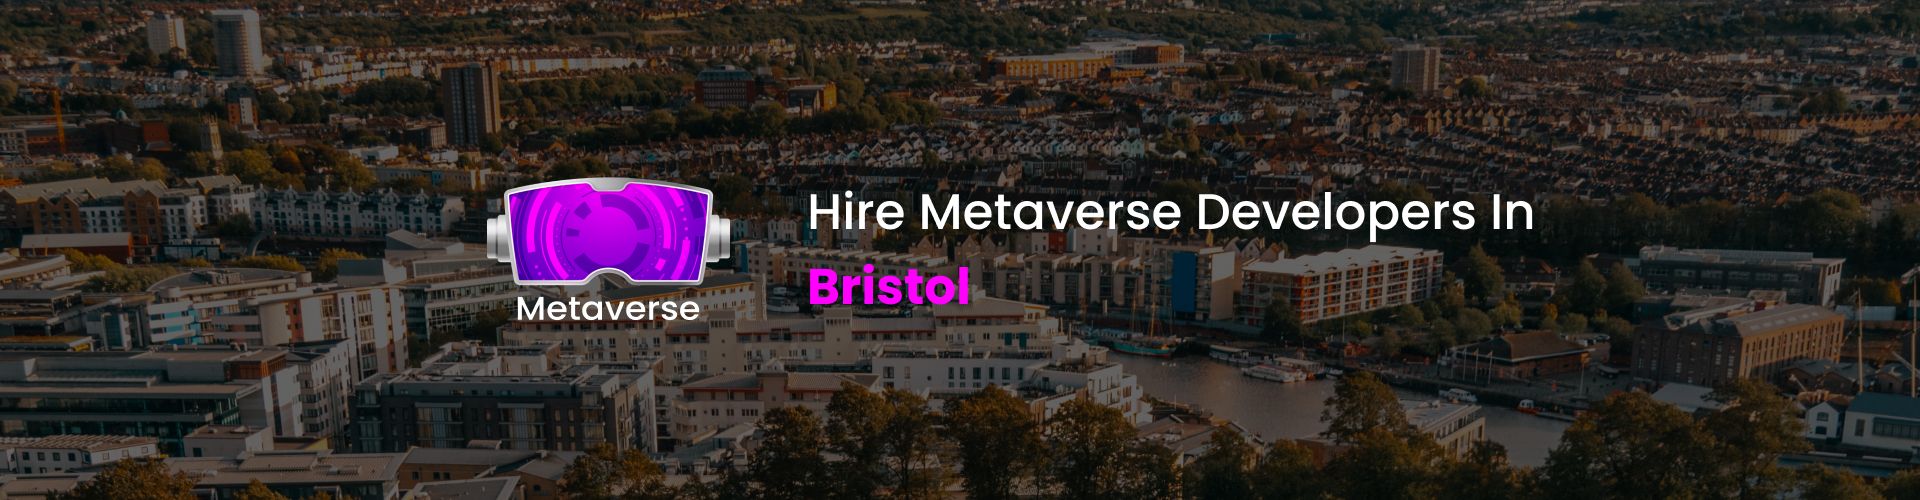 hire metaverse developers in bristol